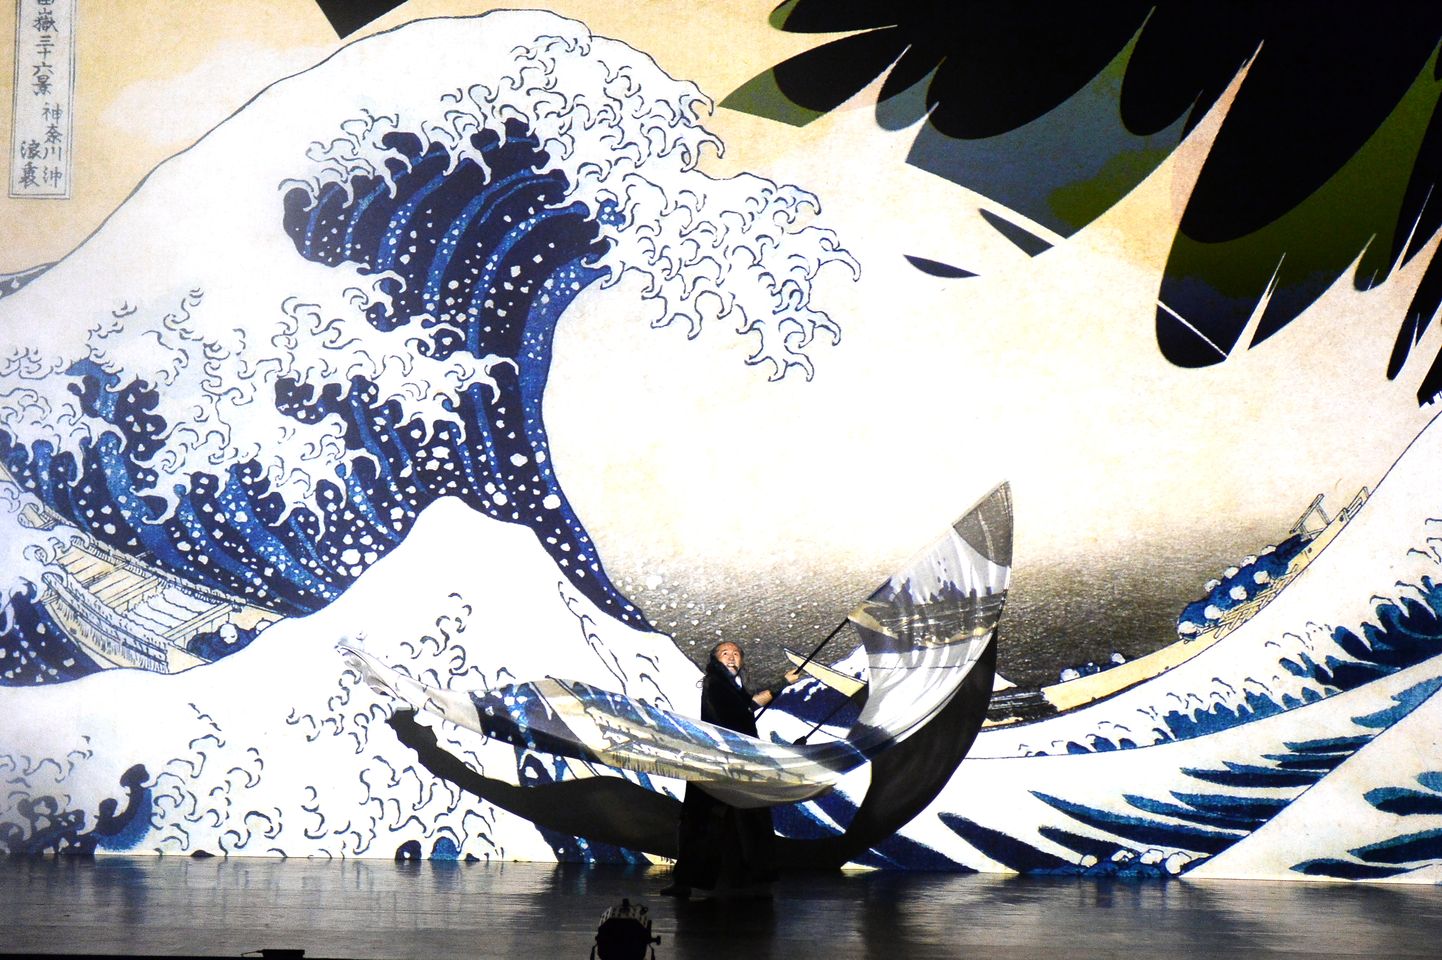 Katsumi Sakakura Performs "The Life Of Hokusai"